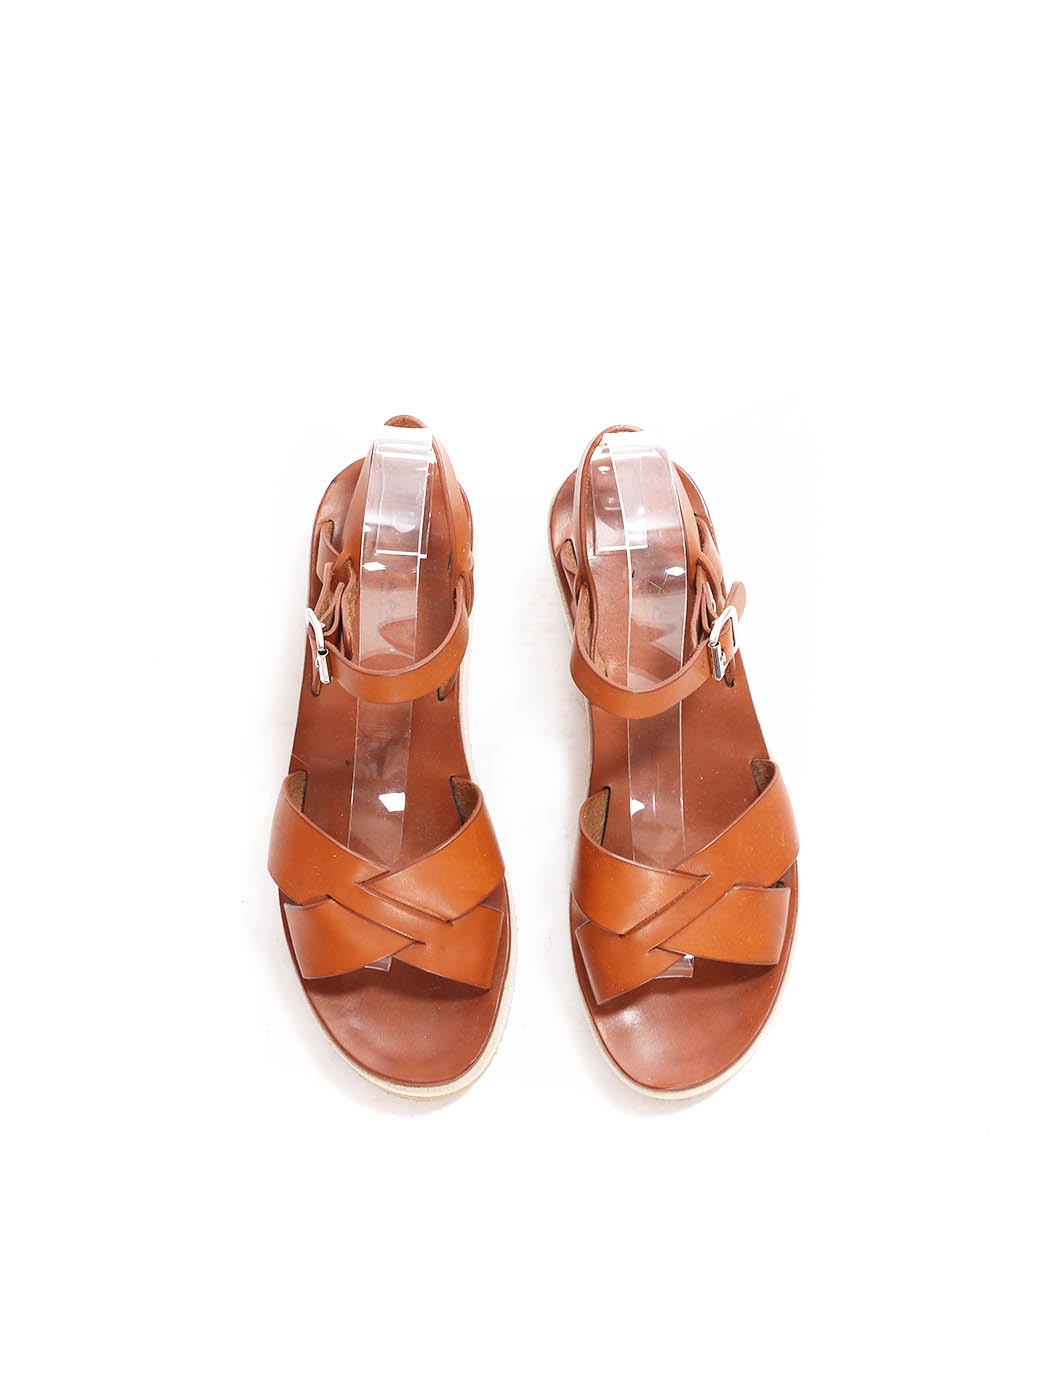 tan sandals small heel